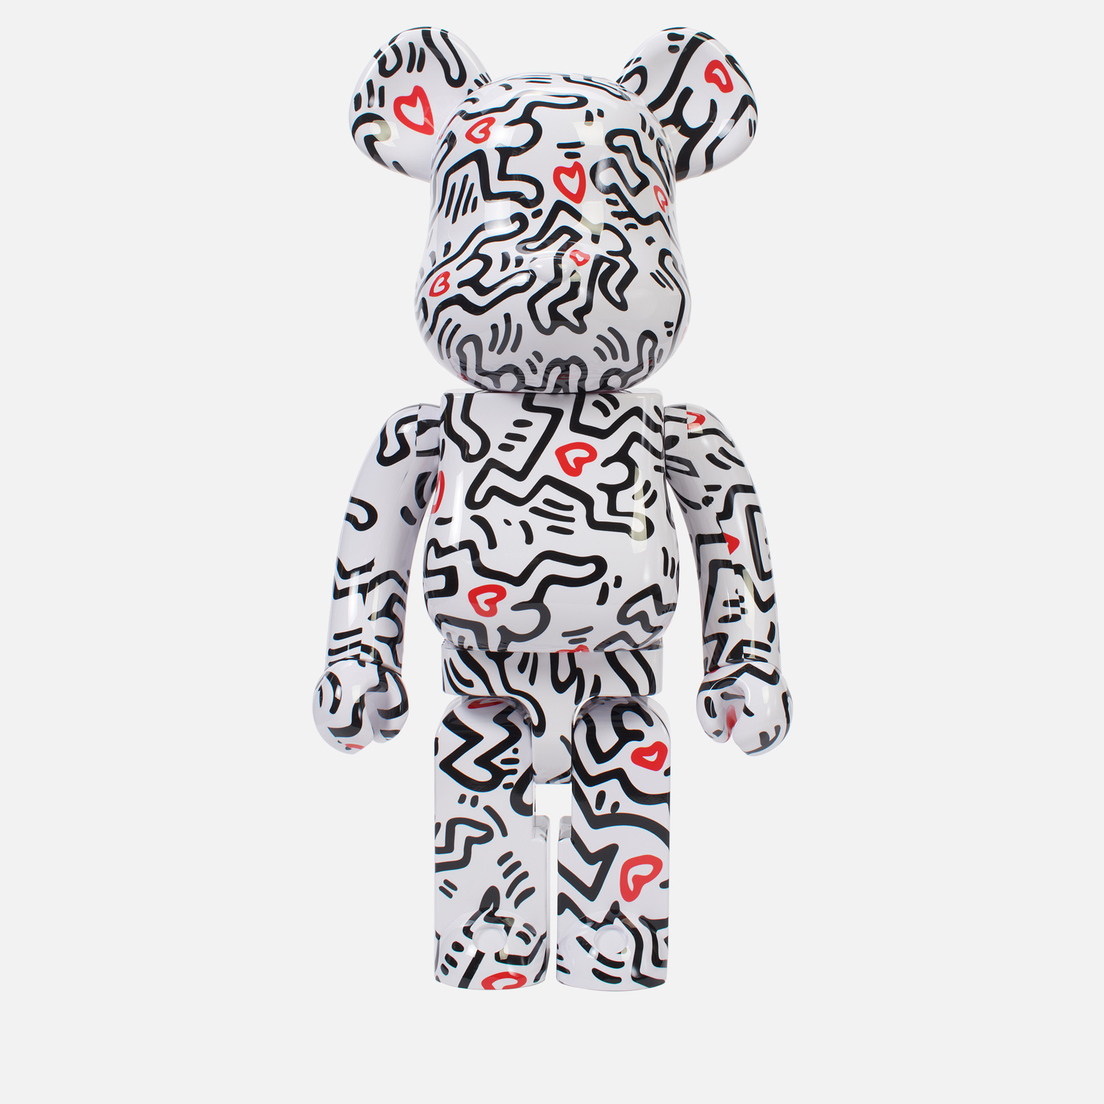 Medicom Toy Игрушка Keith Haring Ver. 8 1000%